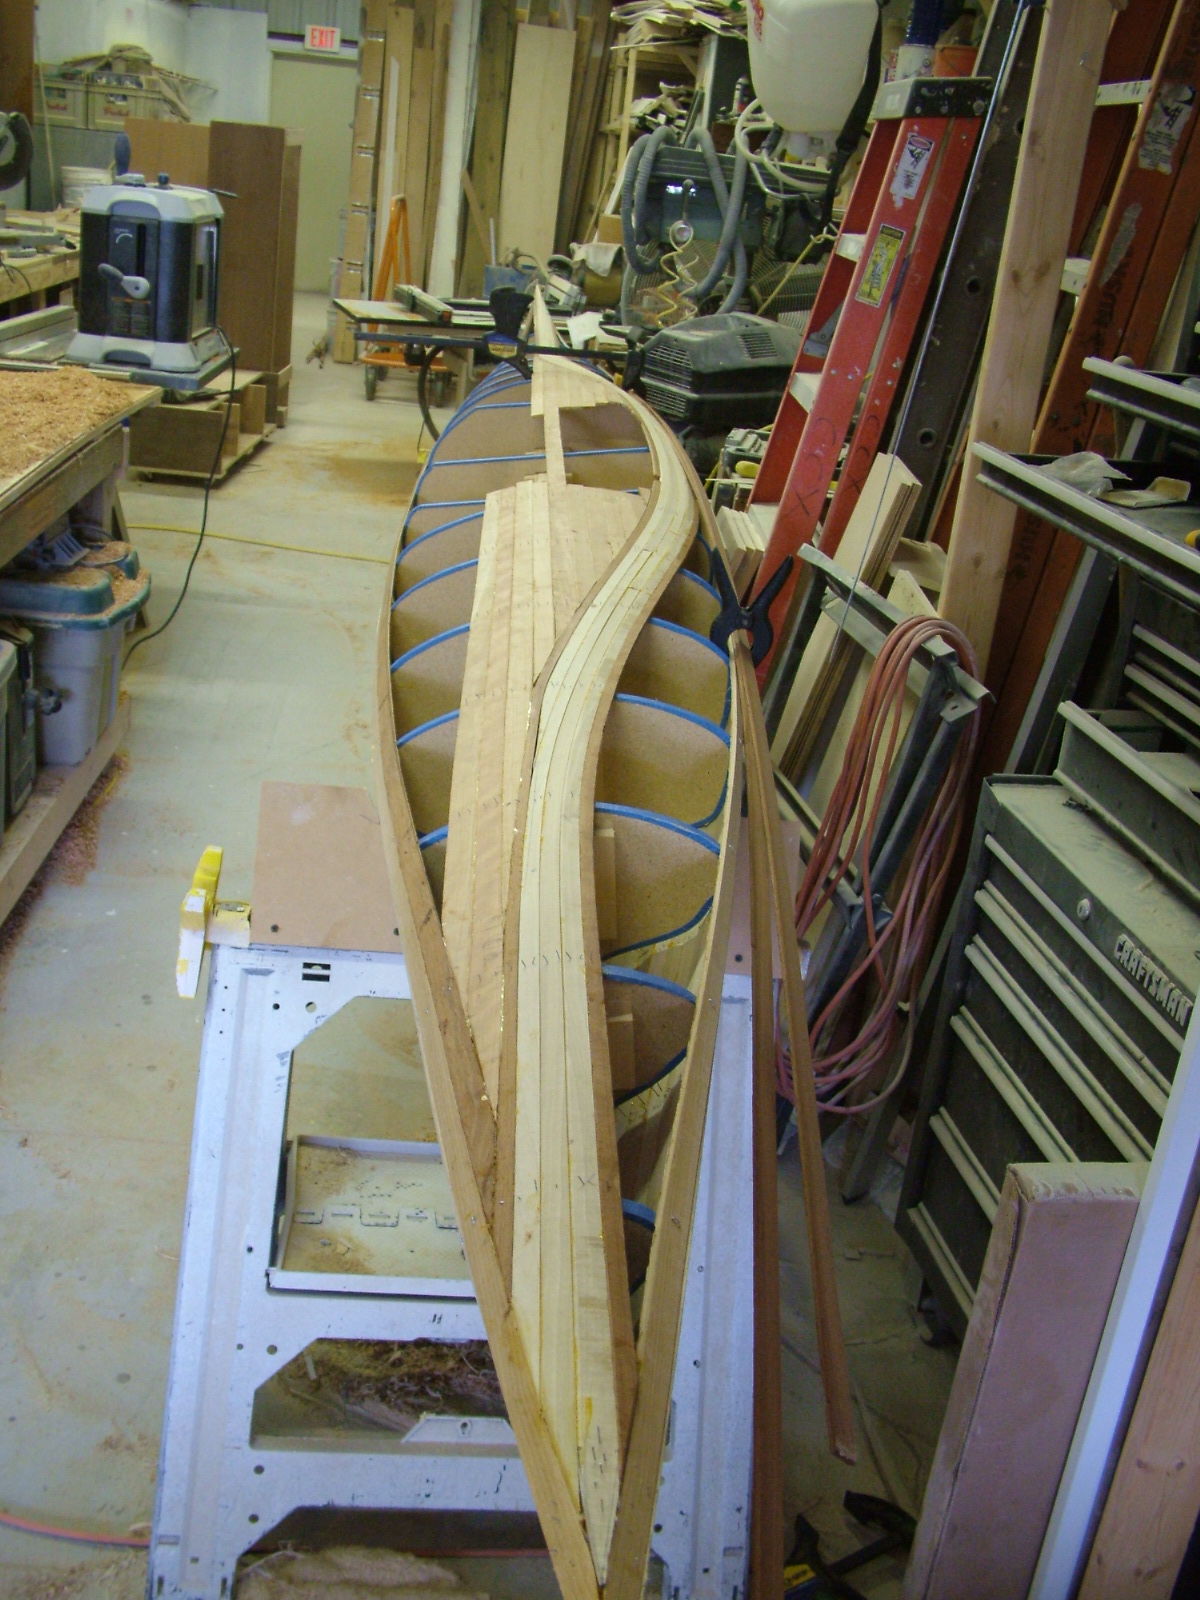 Woodworking woodstrip kayak plans PDF Free Download